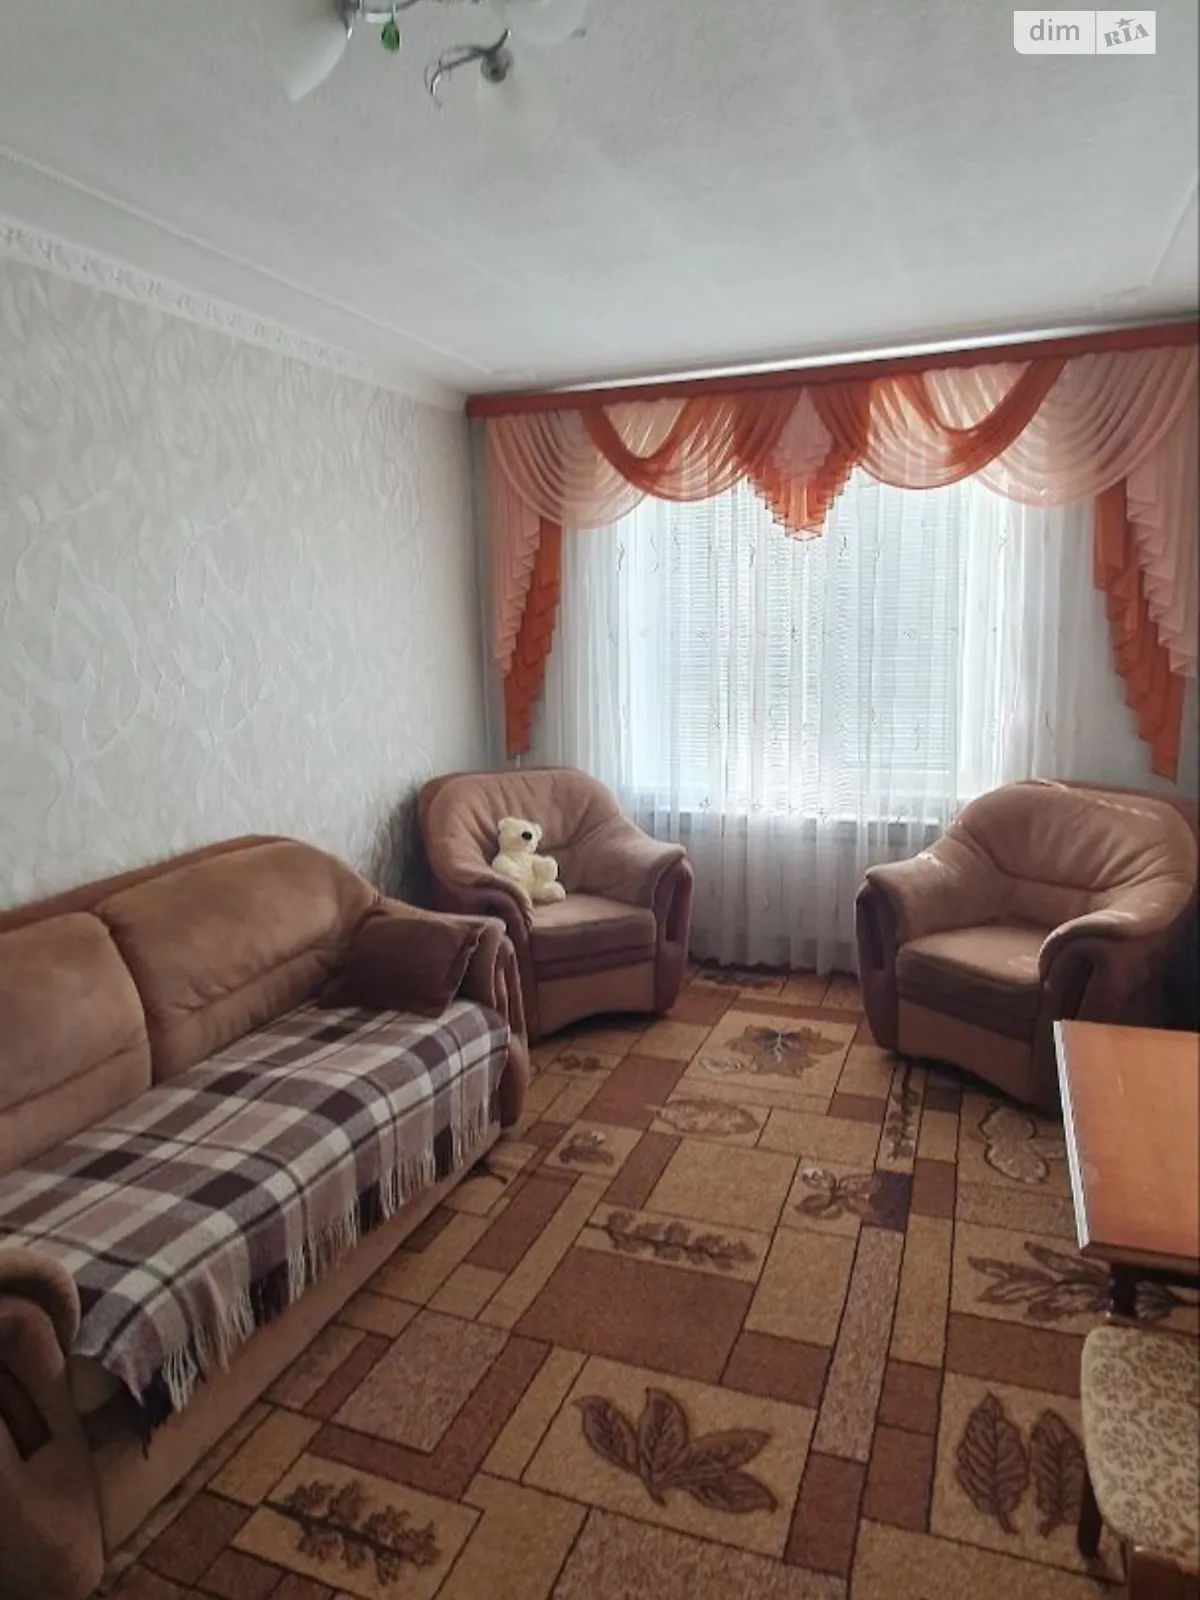 Сдается в аренду 3-комнатная квартира 67 кв. м в Харькове, ул. Академика Павлова, 147 - фото 1